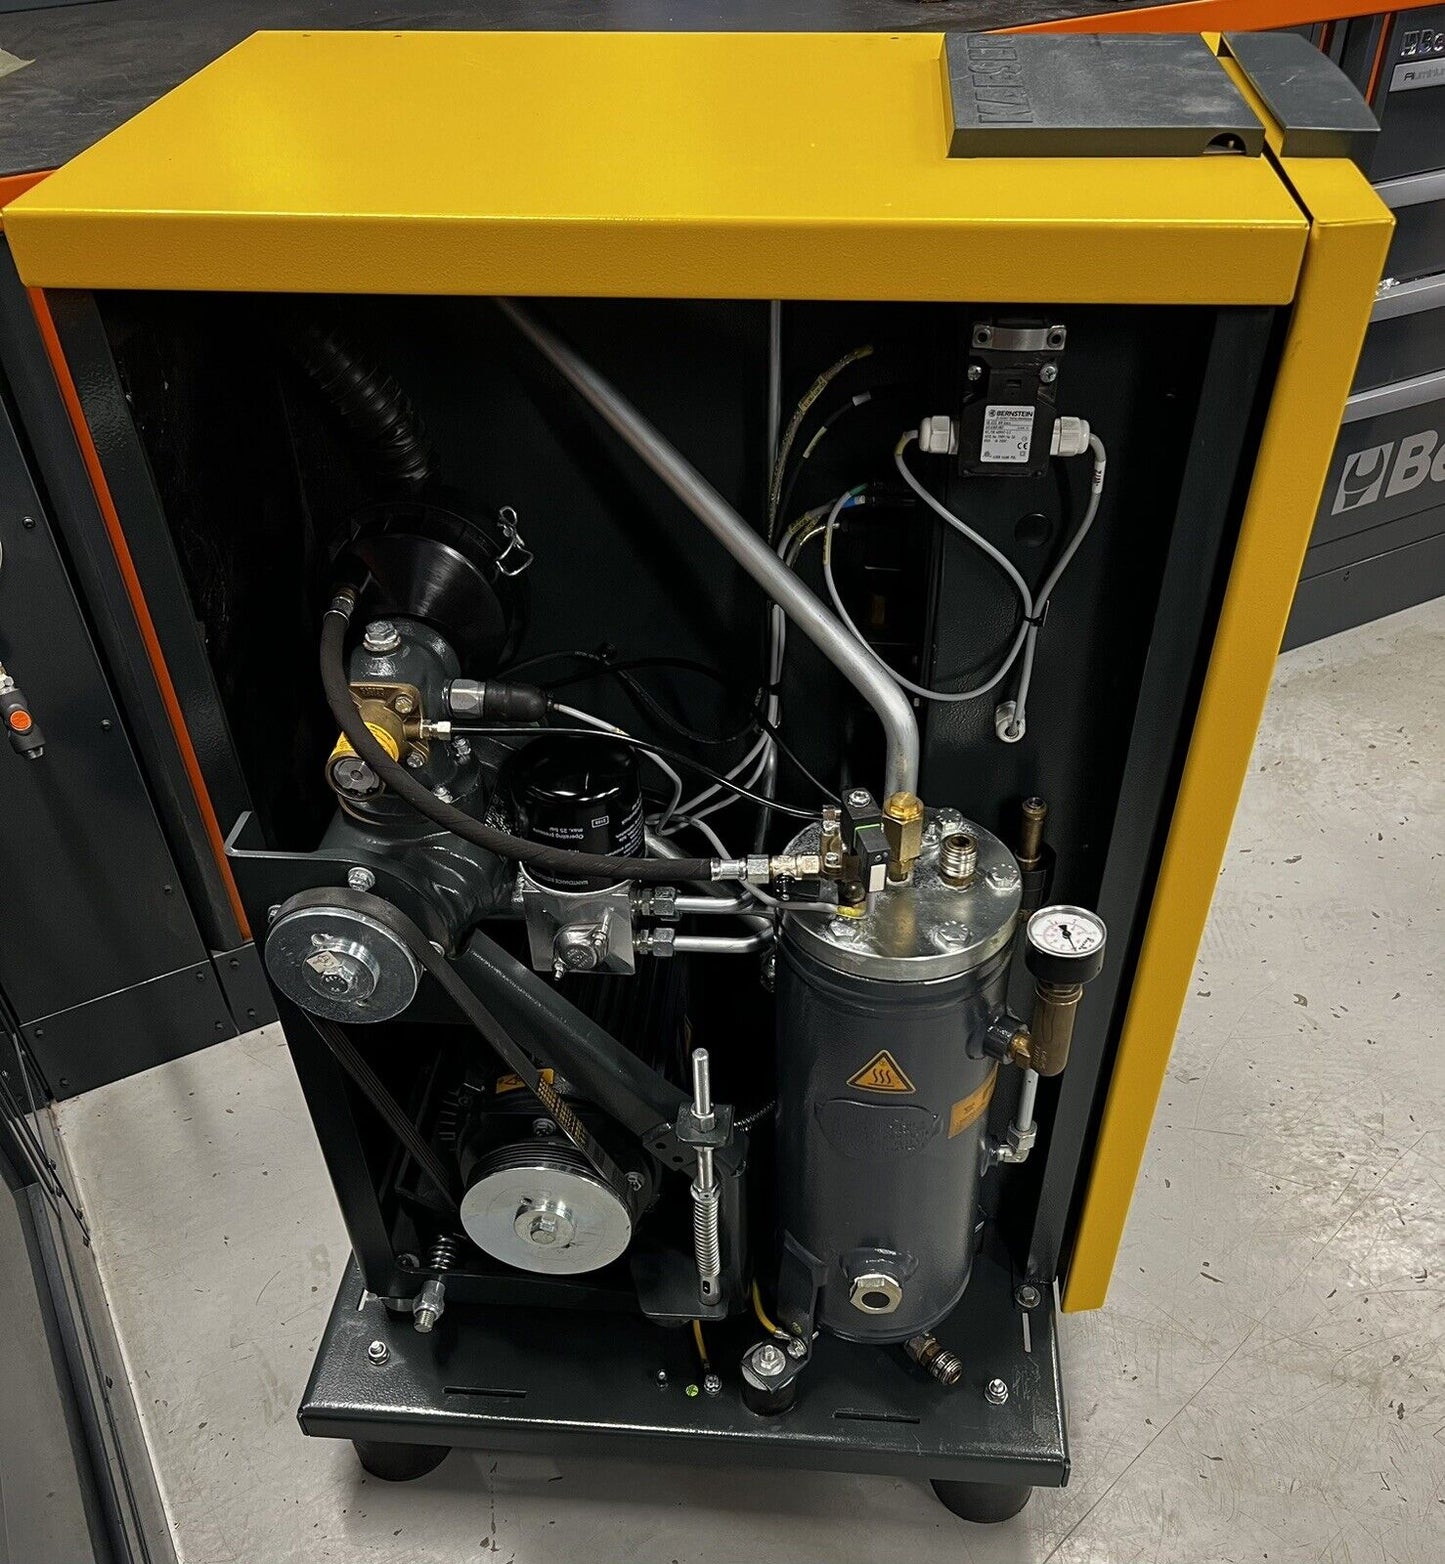 HPC / Kaeser SM12 Rotary Screw Compressor (7.5Kw, 27CFM, 15Bar, 217psi)